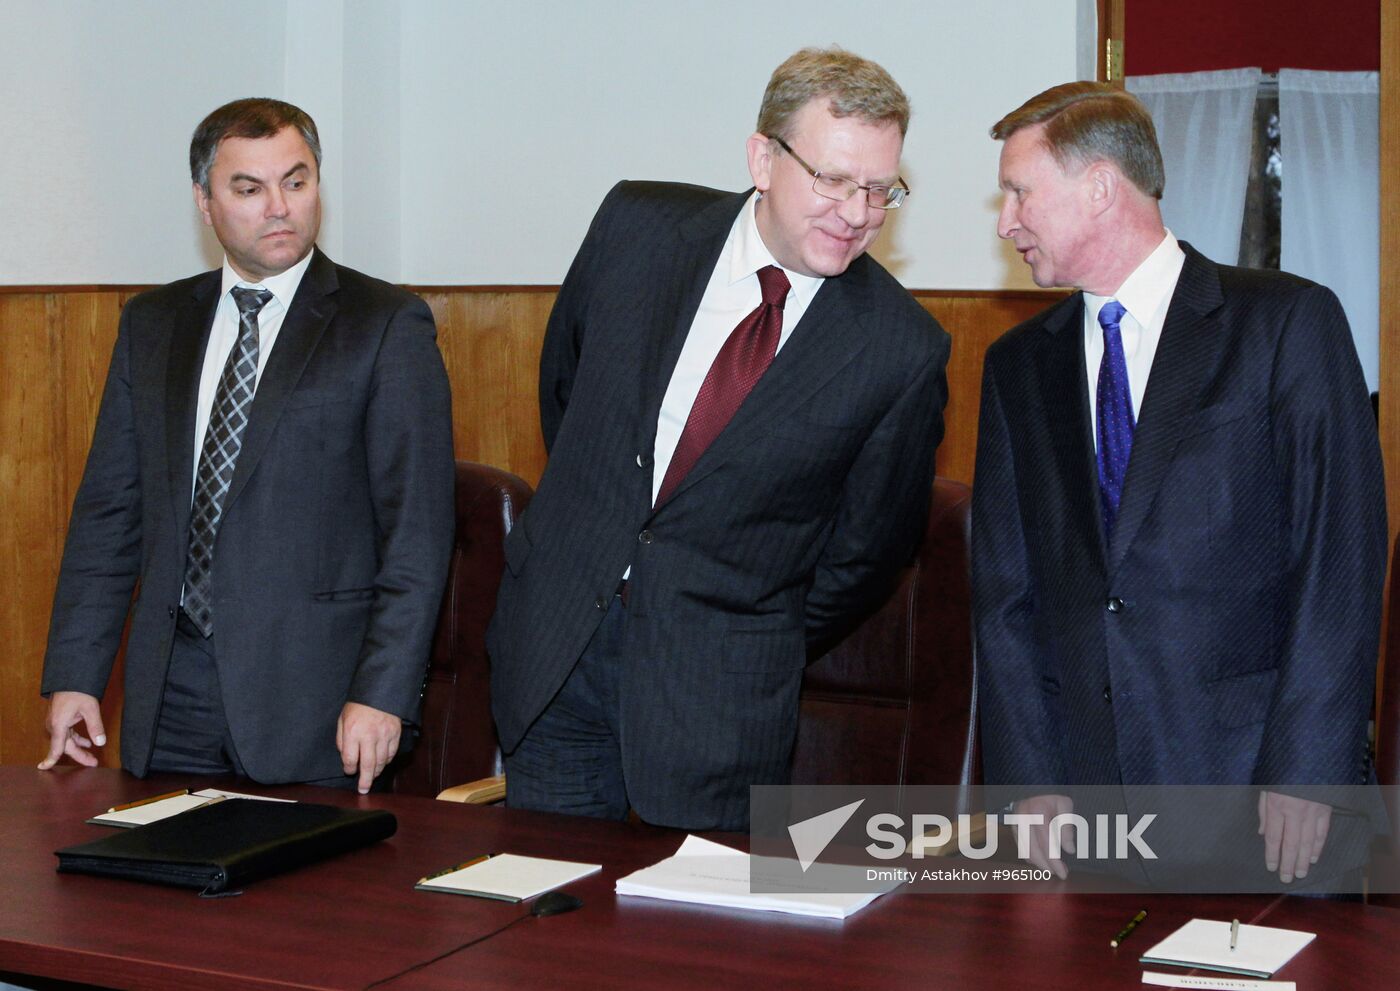 Sergei Ivanov, Alexei Kudrin and Vyacheslav Volodin